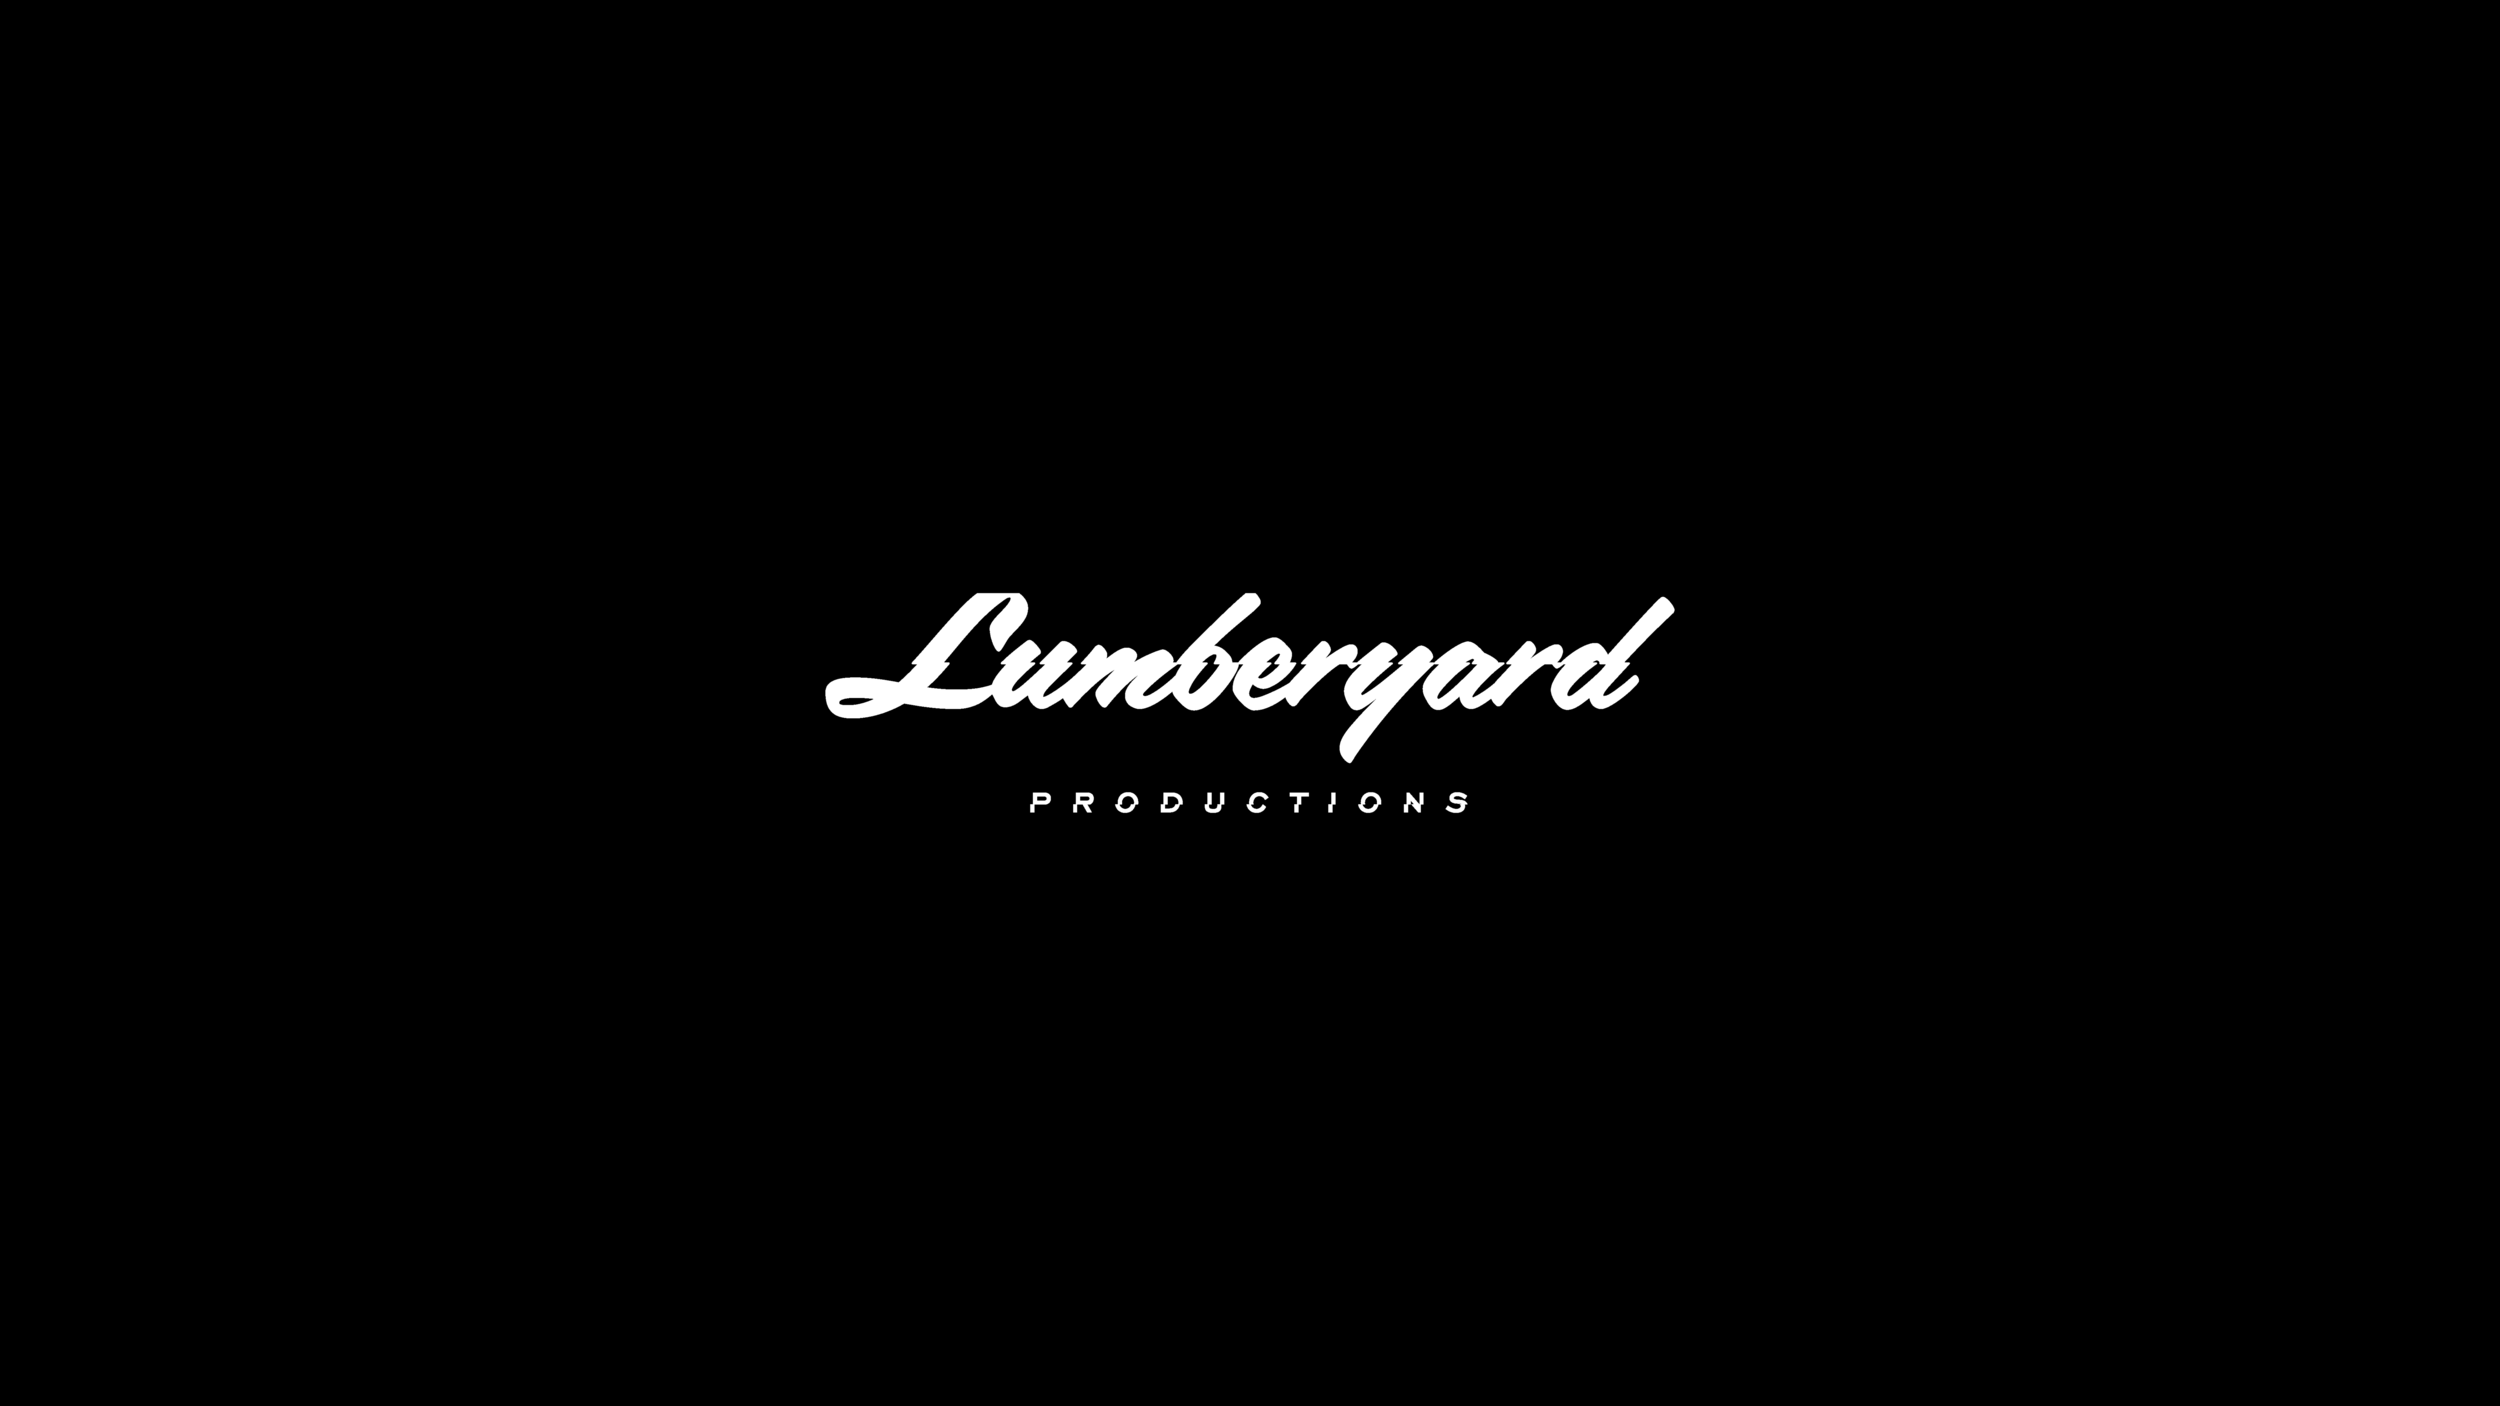 Lumberyard_Credentials (dragged)1.png